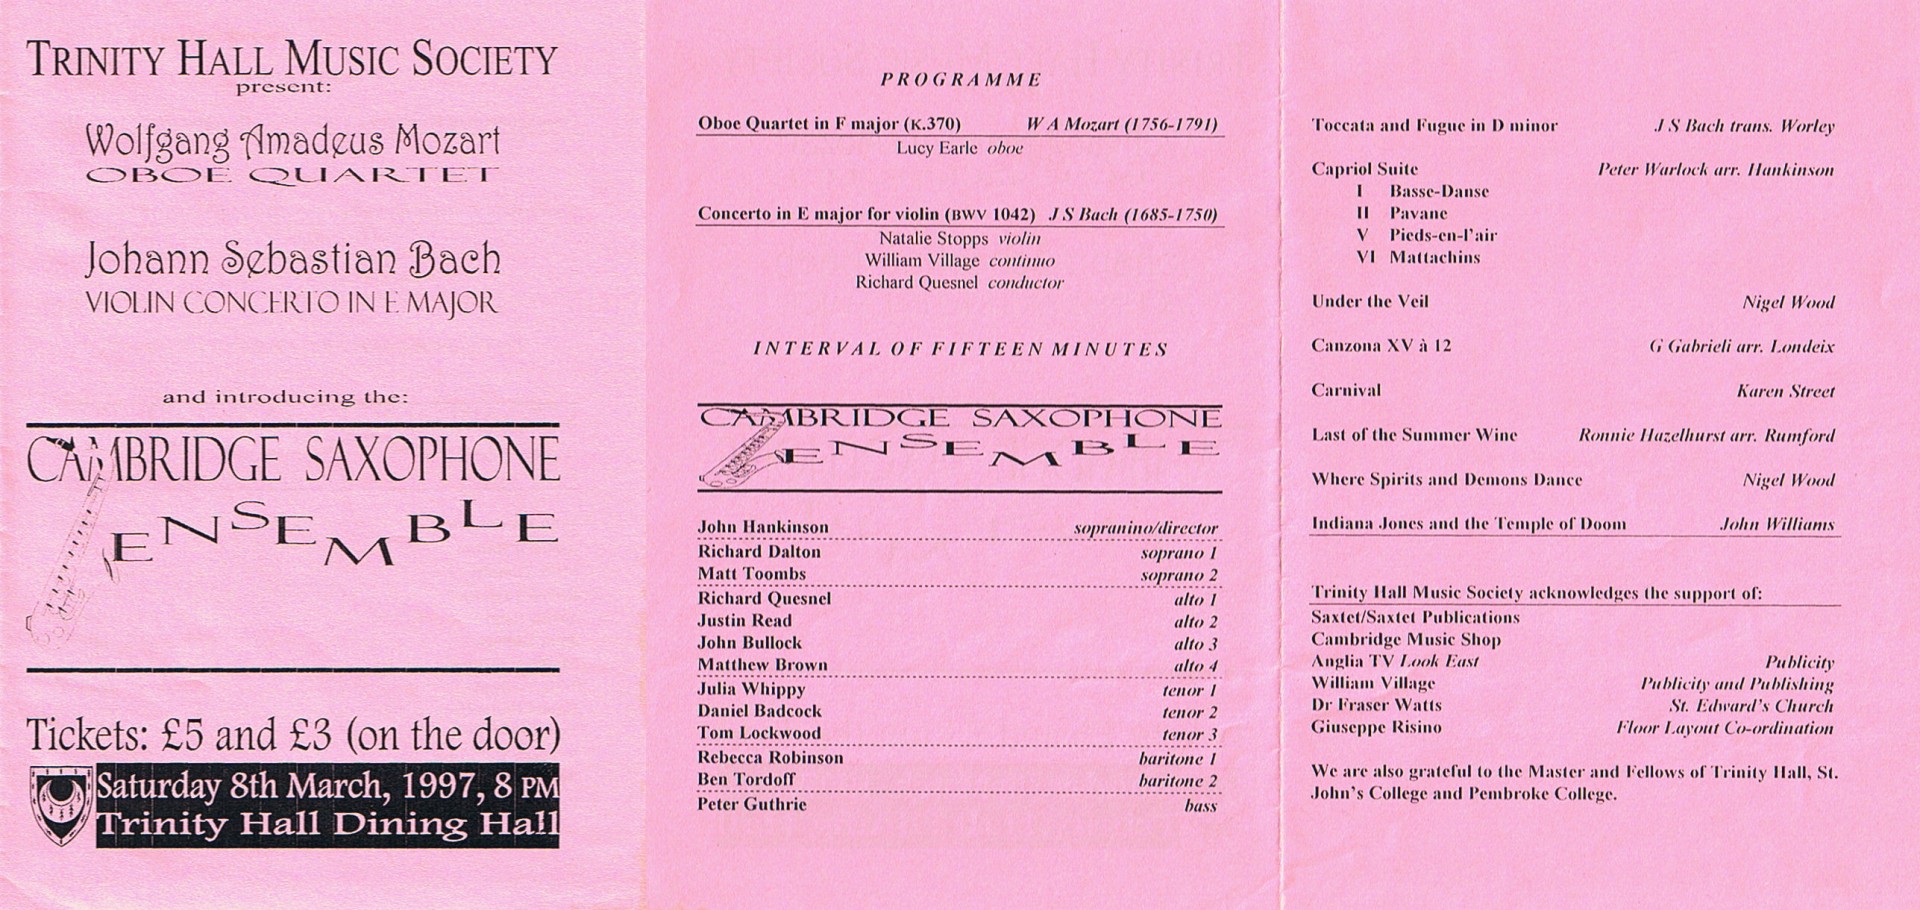 Programme for Cambridge Sax Ensemble at Trinity Hall, 1997